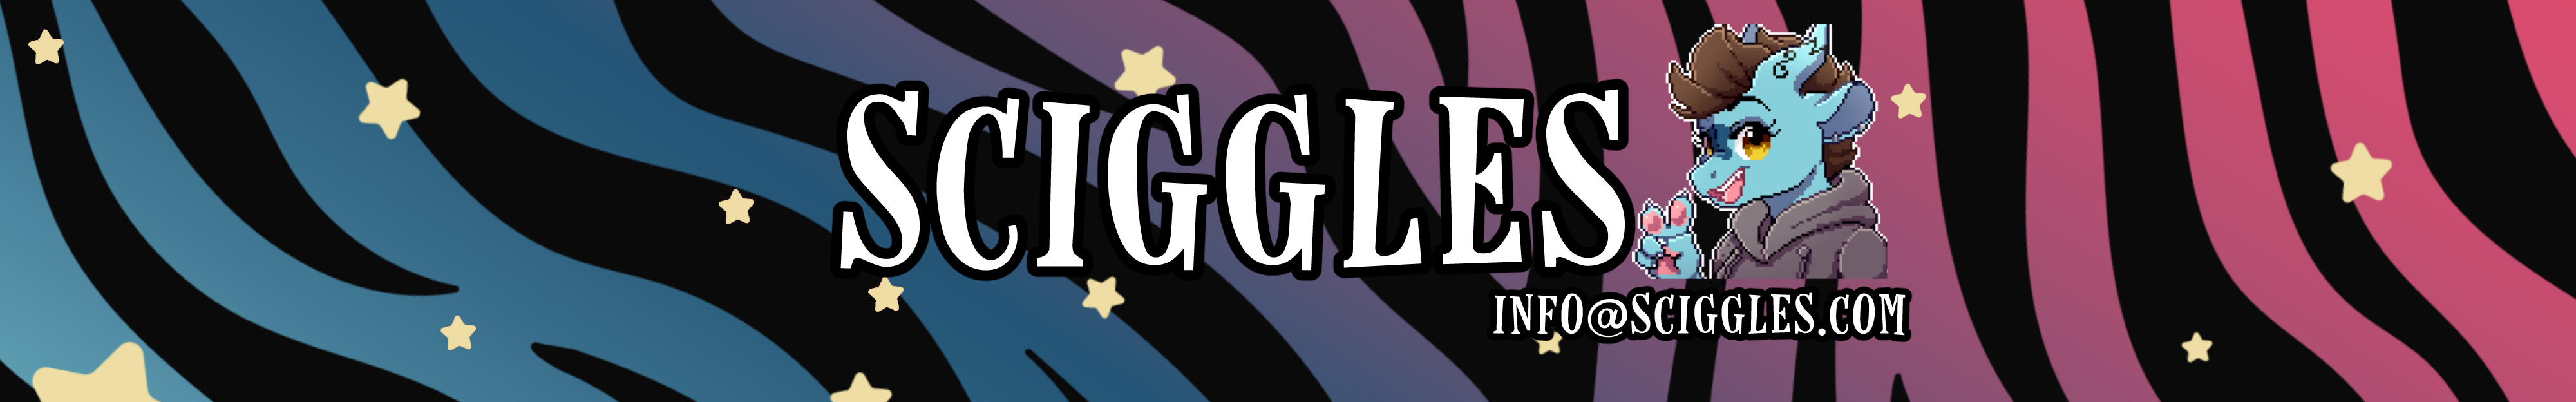 Sciggles Art Logo